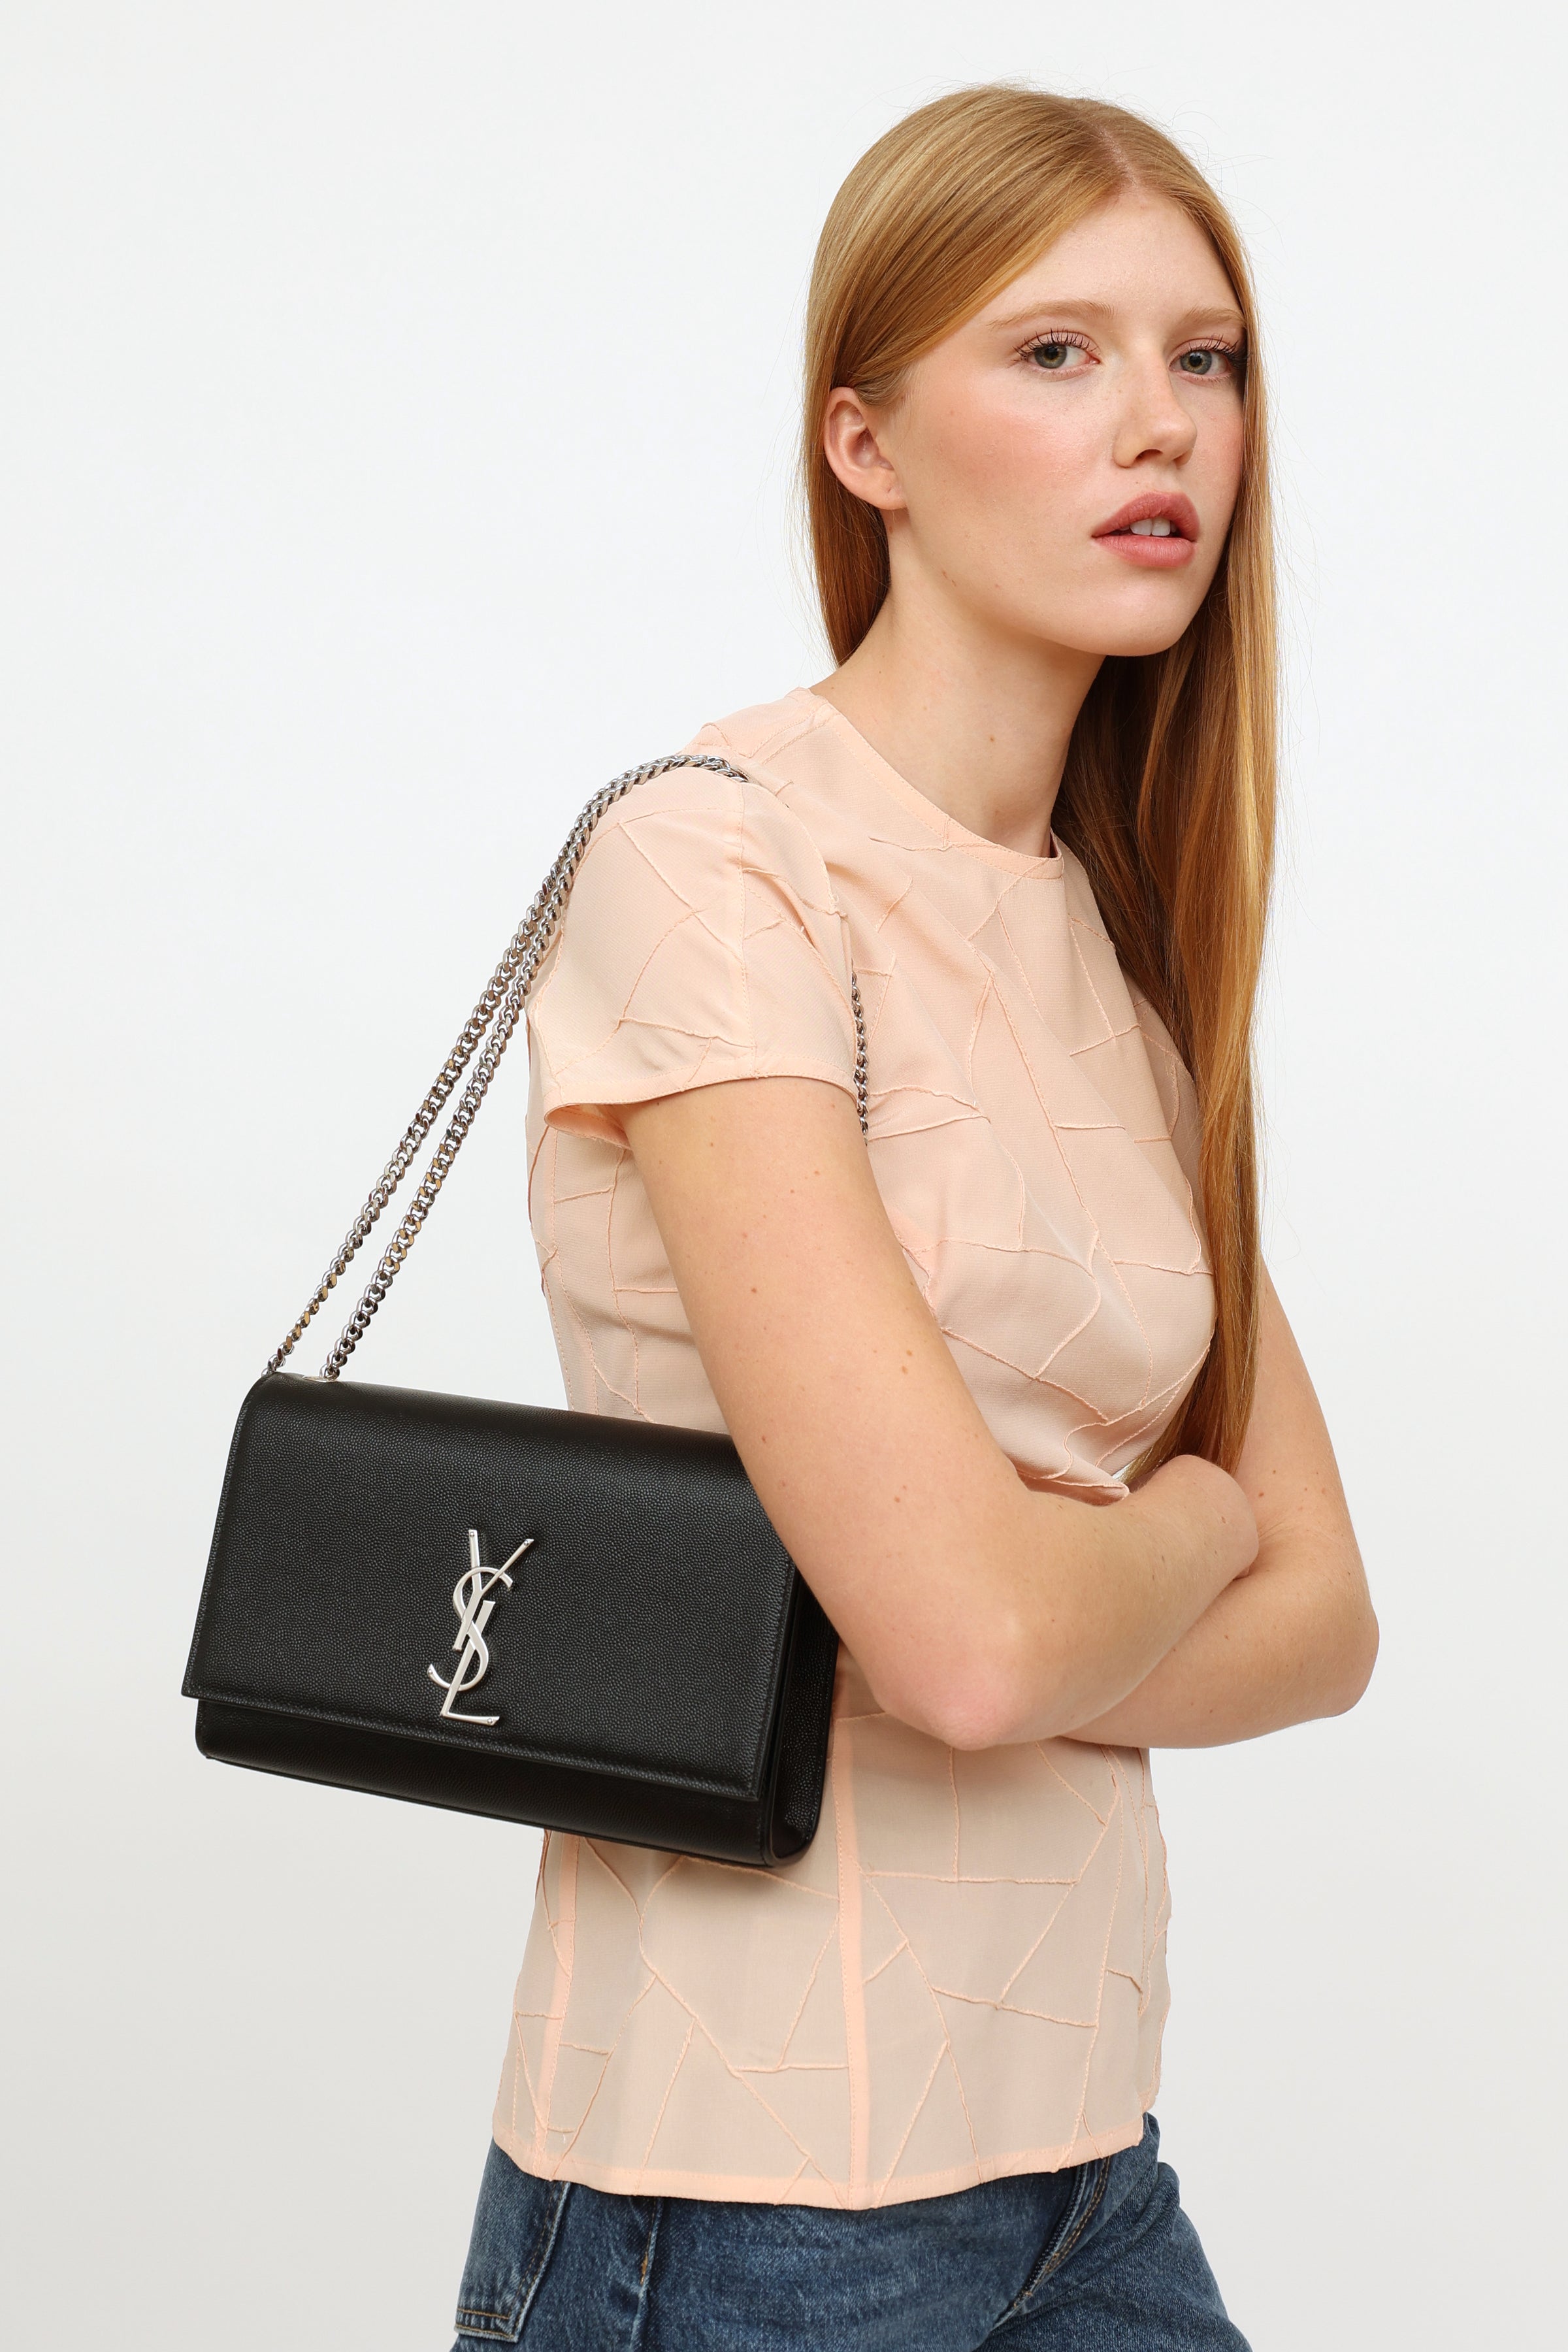 Bag of the Week: Saint Laurent Kate Bag – Inside The Closet